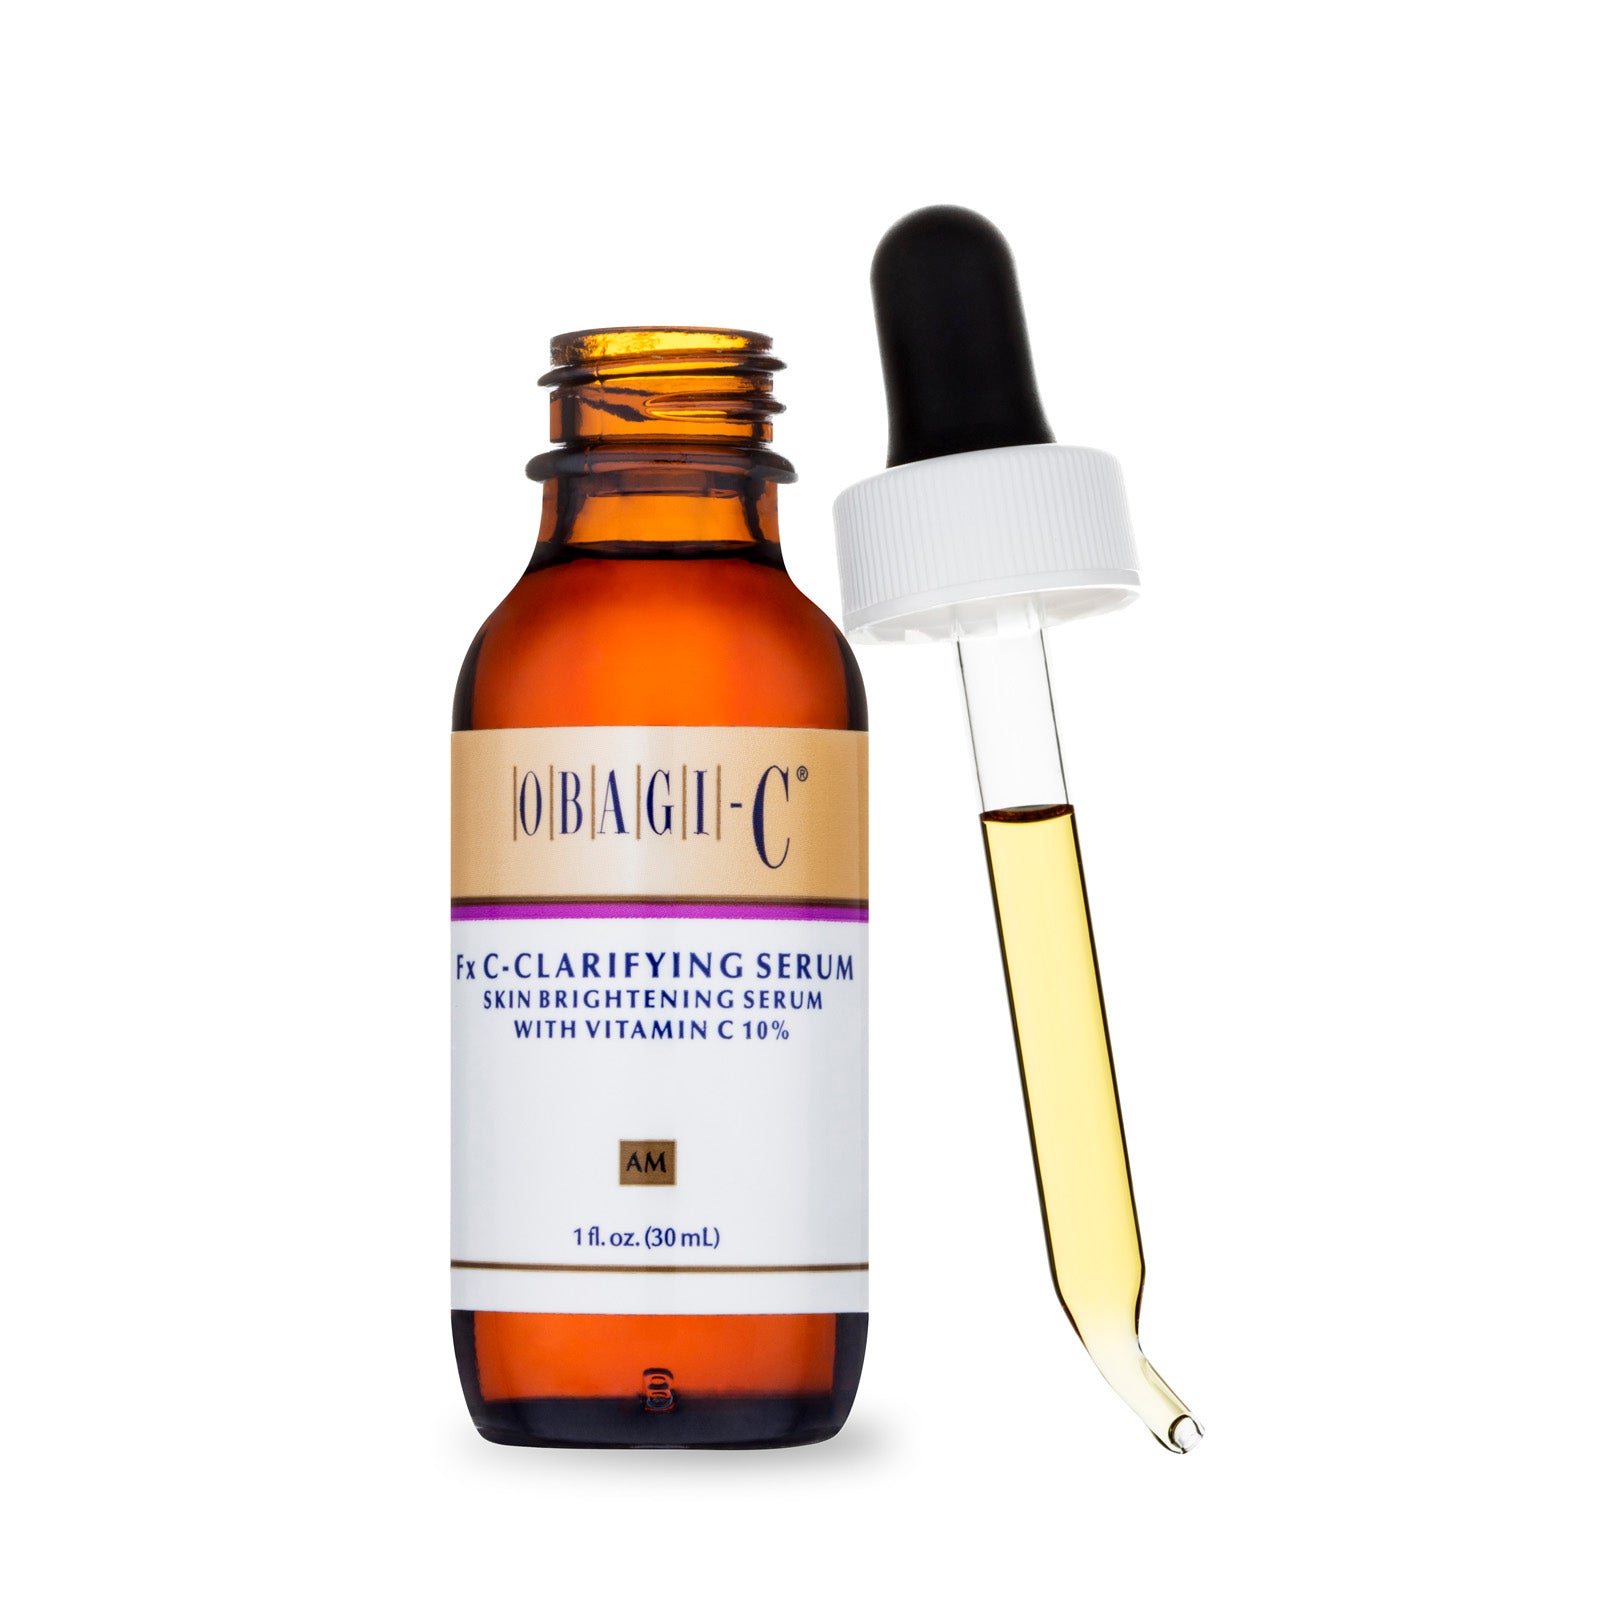 Obagi-C Fx C-Clarifying Serum 1.0 fl oz Skin-brightening serum with Vitamin C - Beauty By Vianna